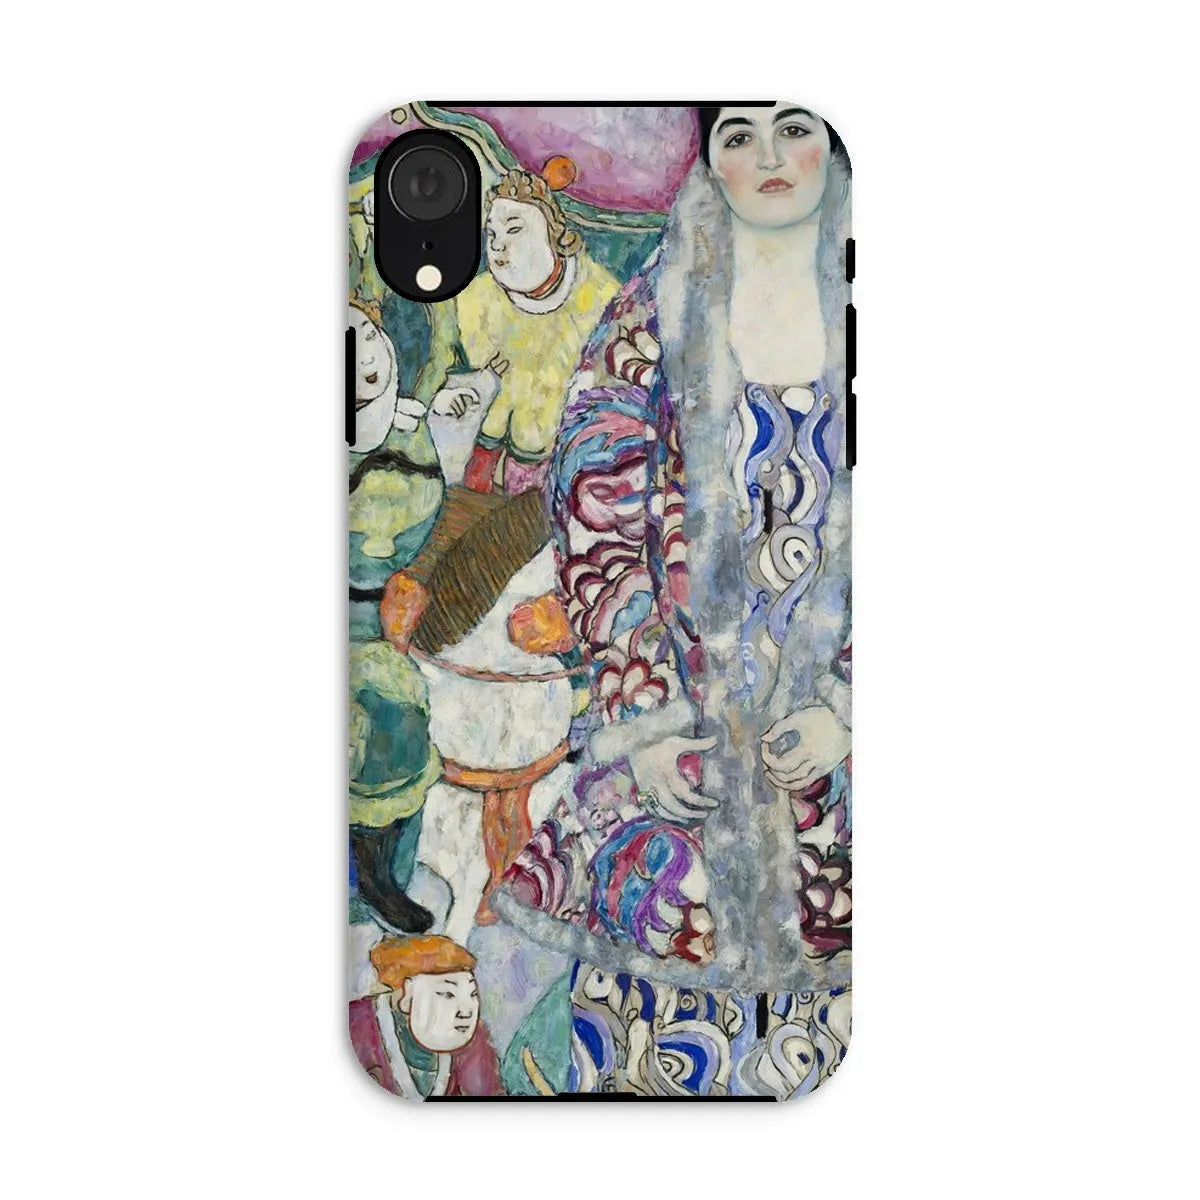 Friederike Maria Beer - Viennese Art Phone Case - Gustav Klimt - Iphone Xr / Matte - Mobile Phone Cases - Aesthetic Art